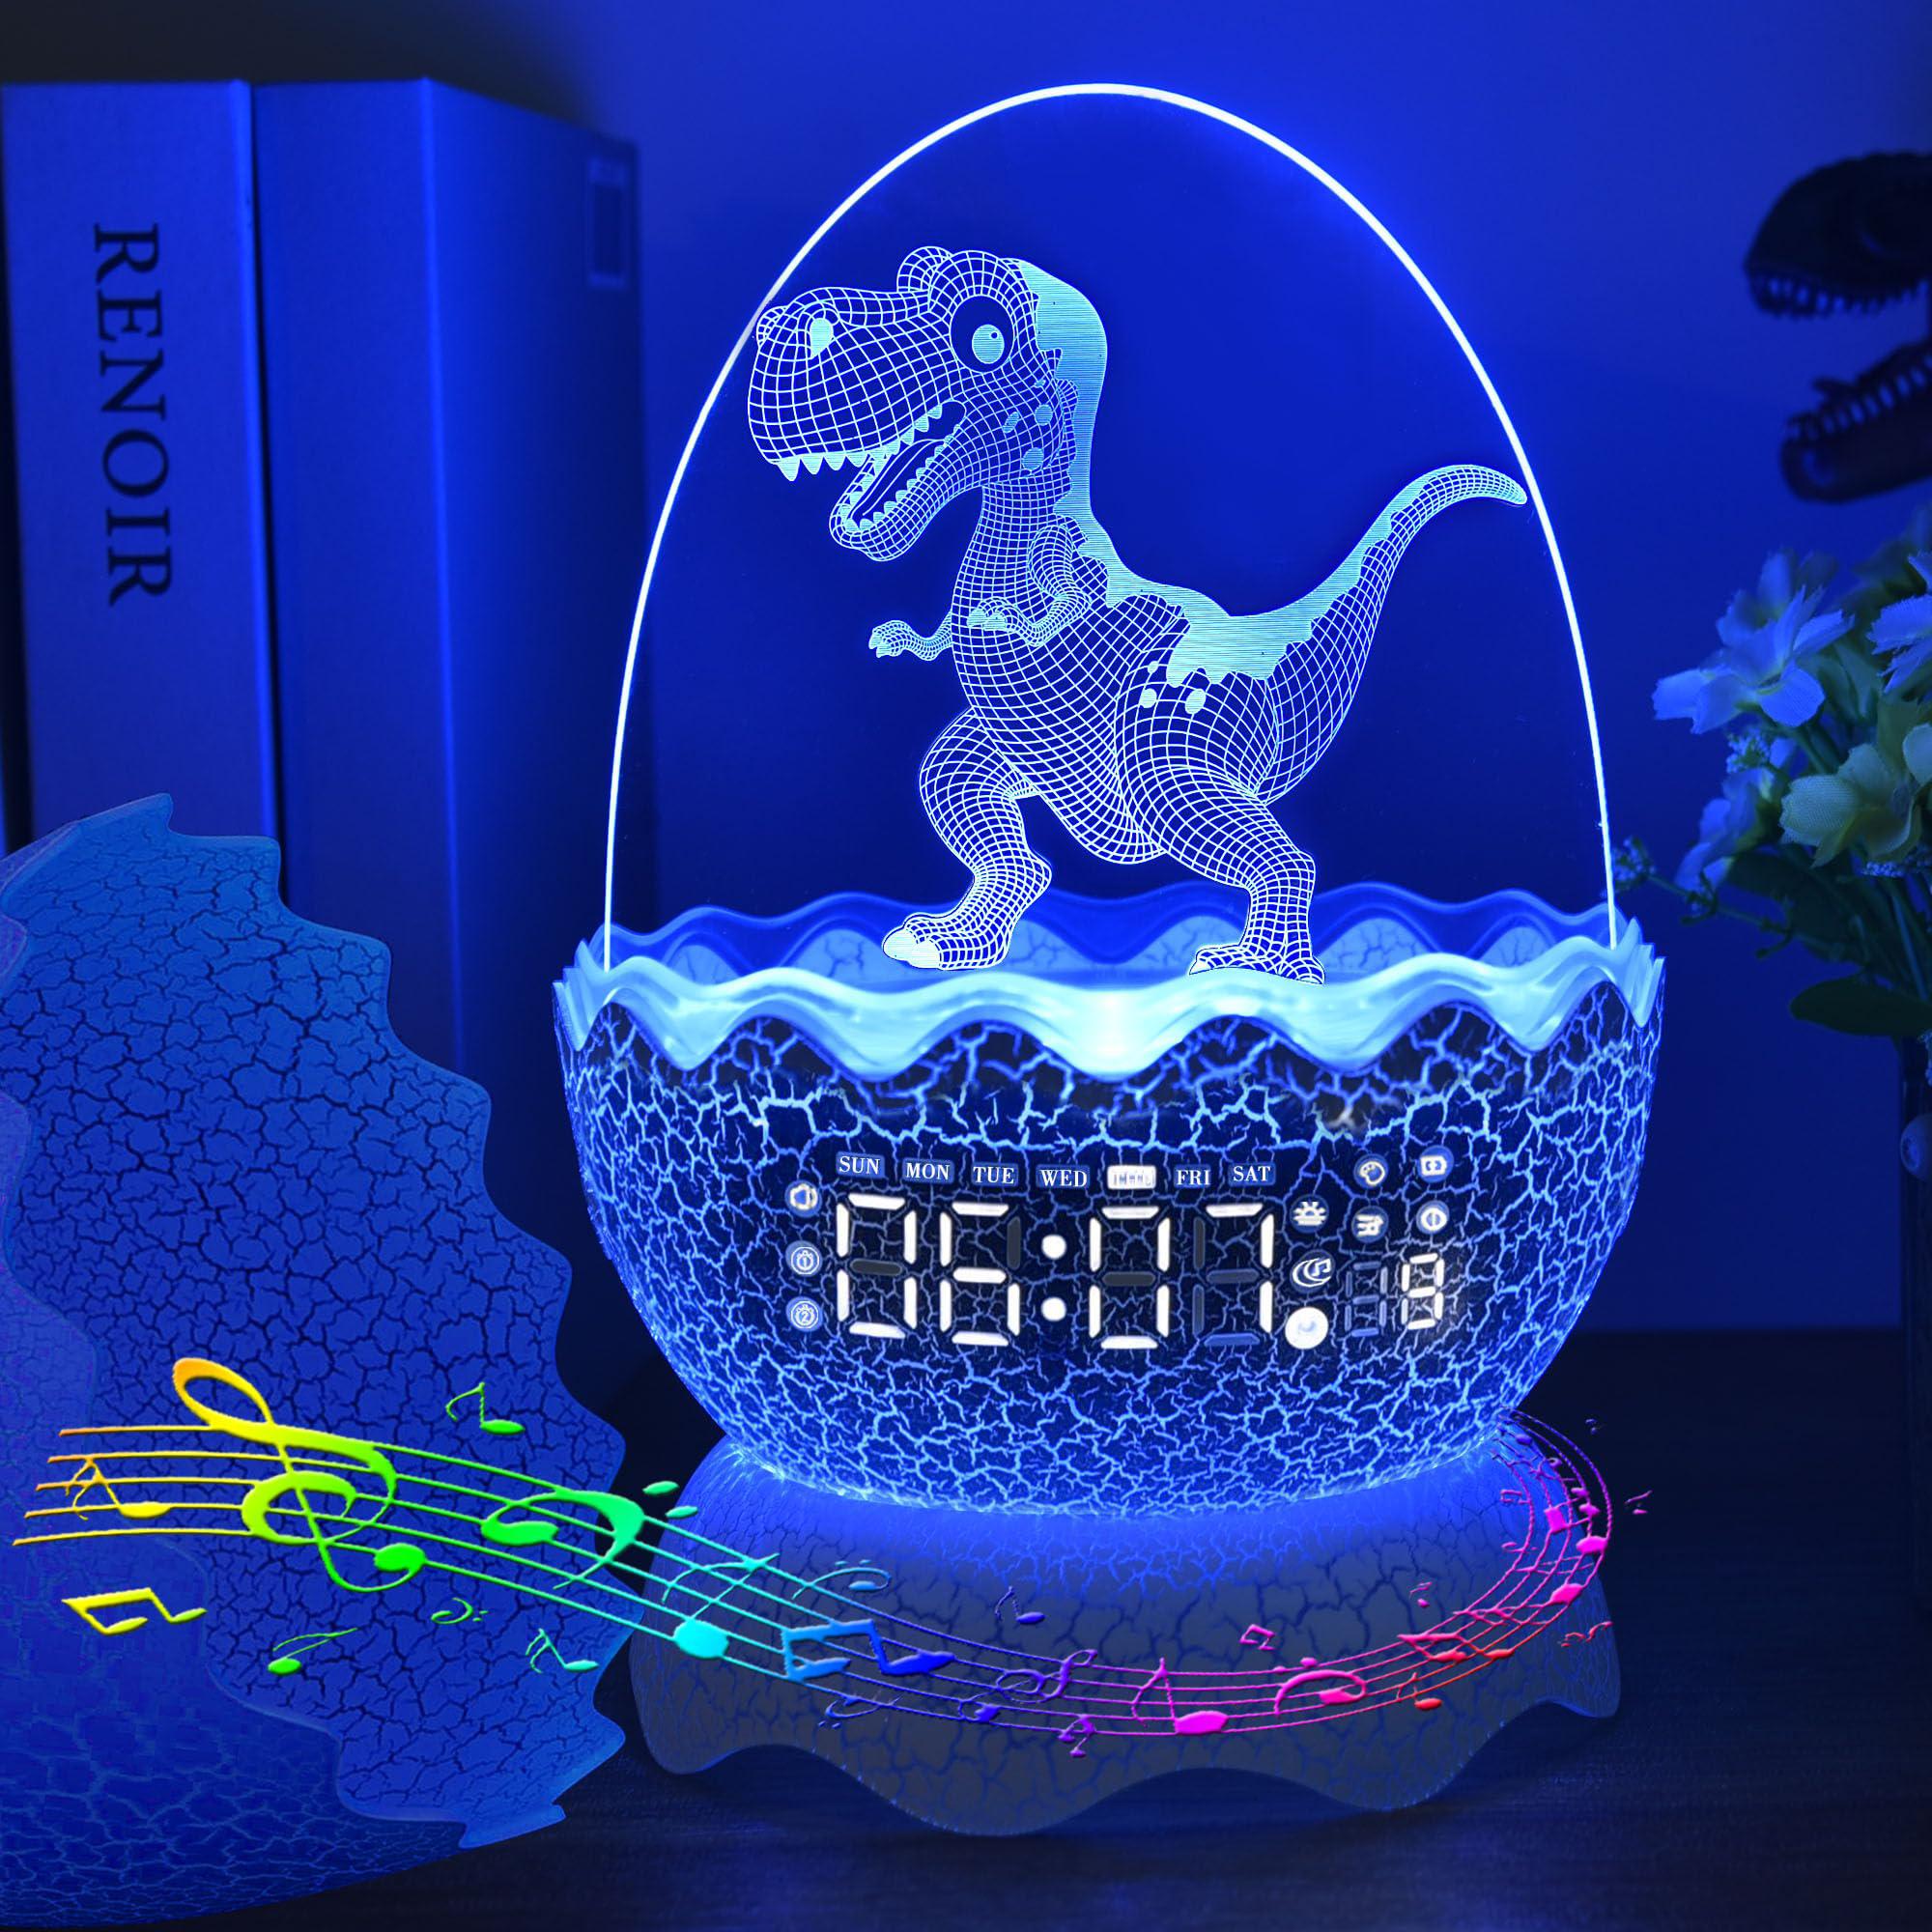 mtdyhy cute dinosaur egg digital clock/alarm clock/night light/music & white noise aid sleep machine/bluetooth speaker, decor ideal 